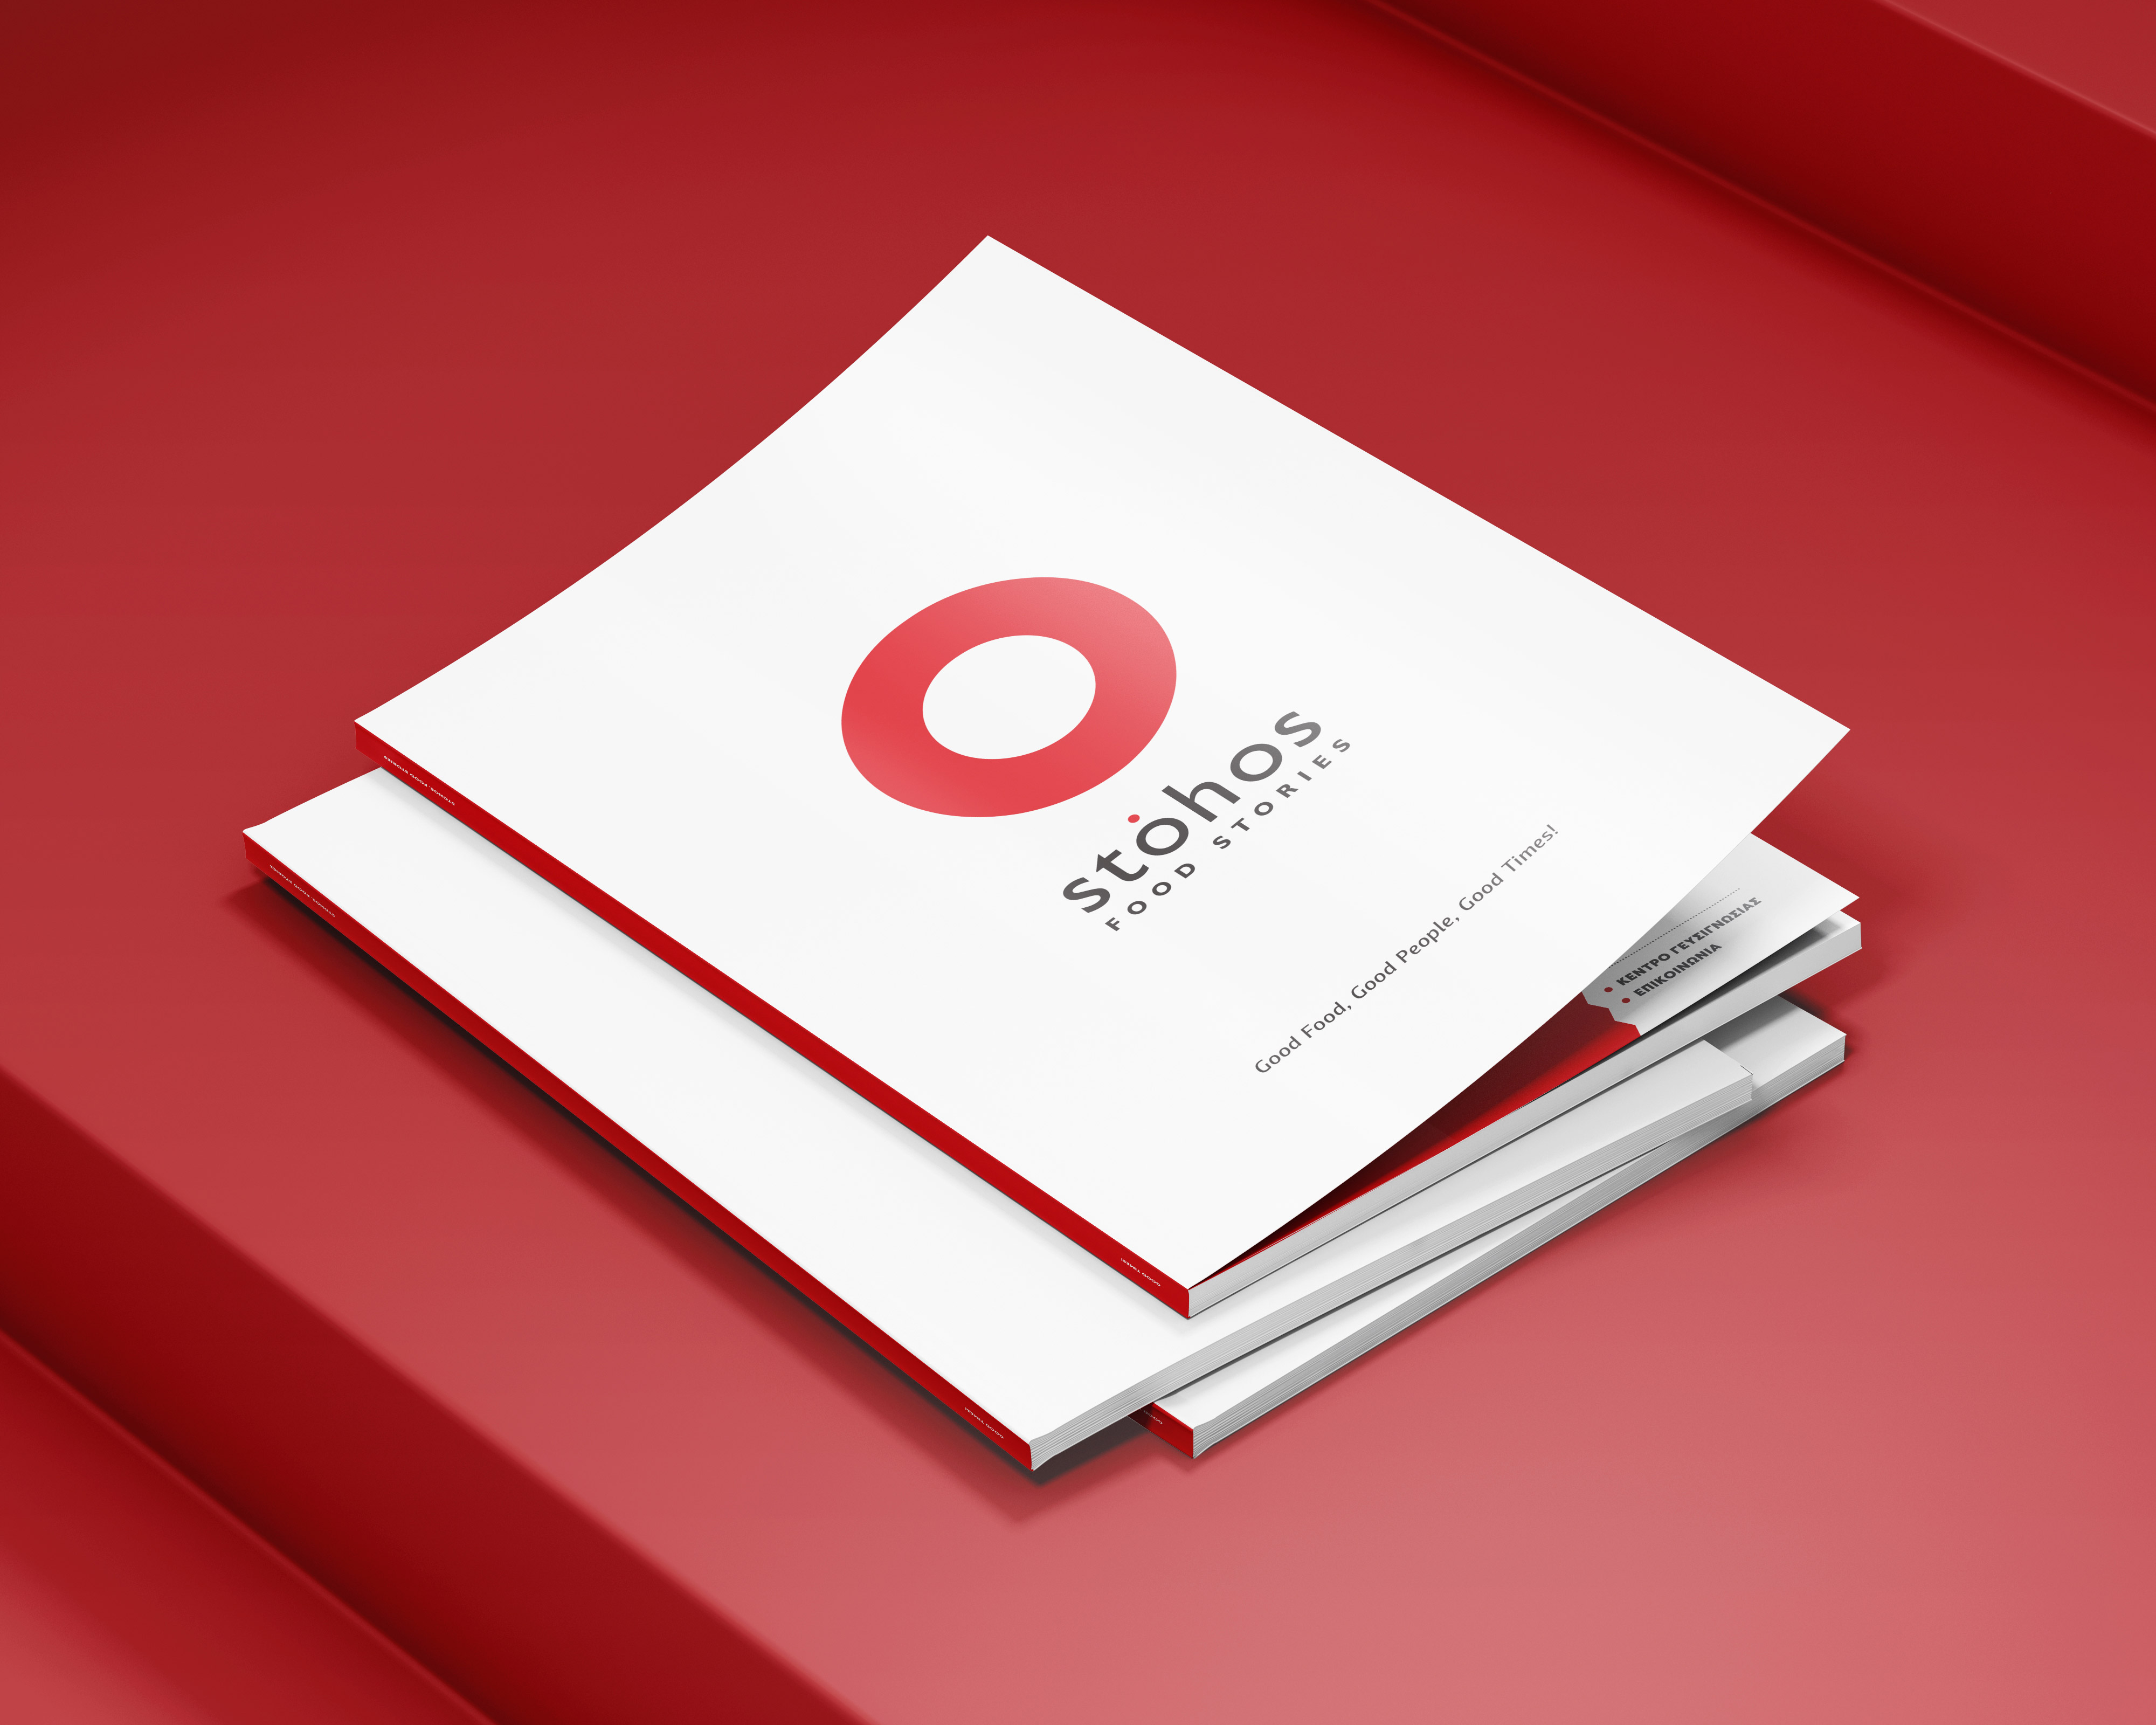 stohos catalog isometric view on red background